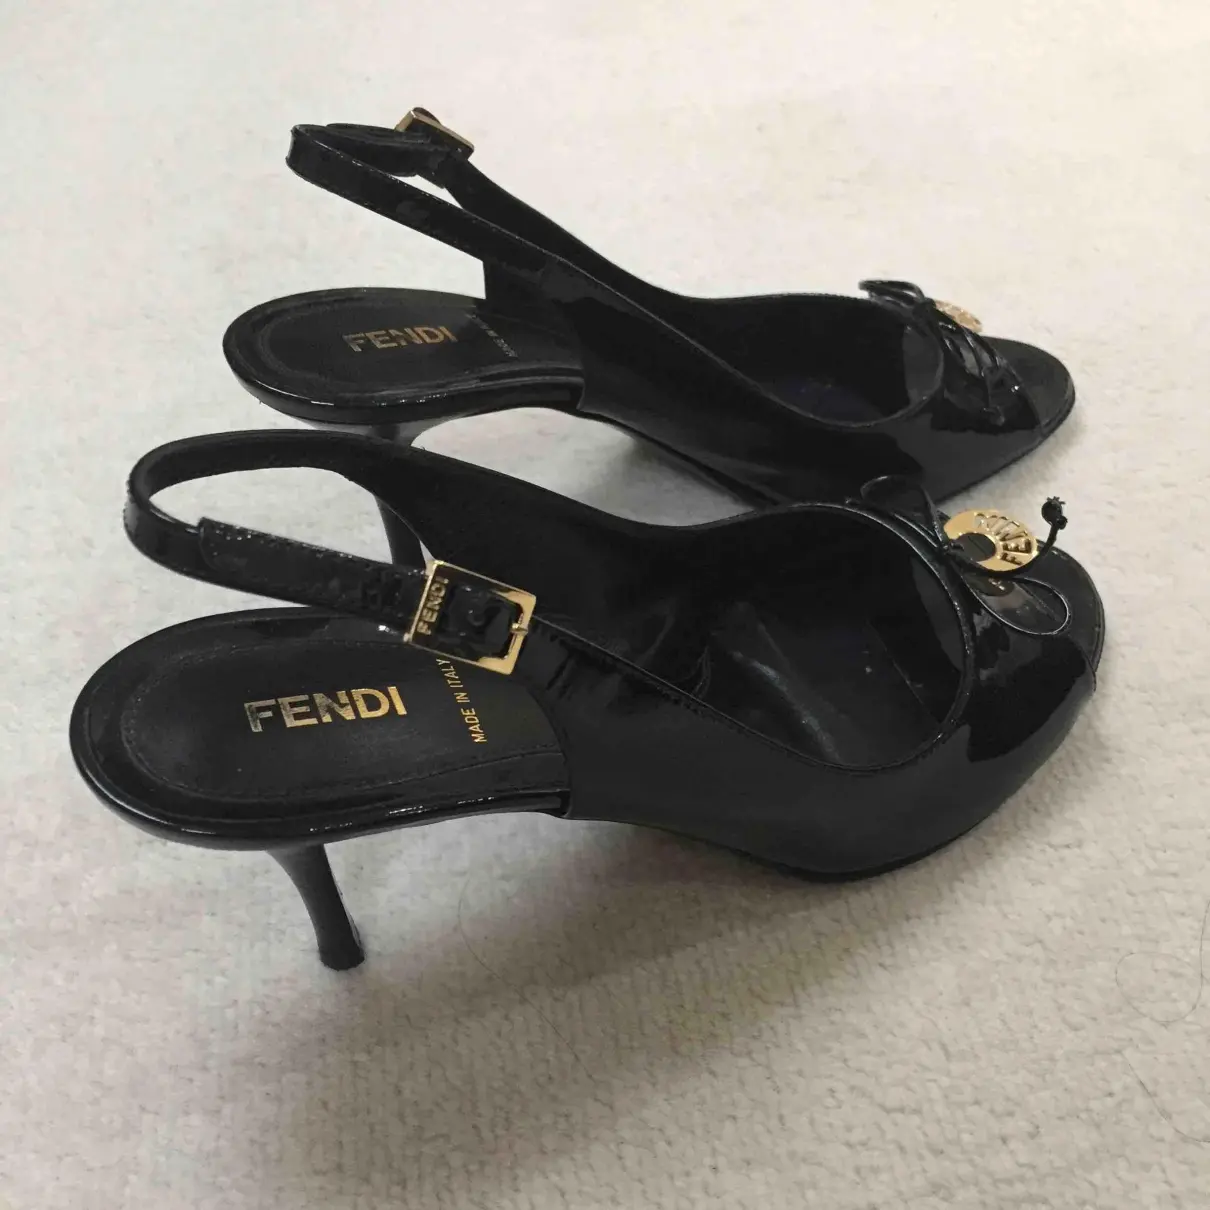 Fendi Patent leather sandal for sale - Vintage